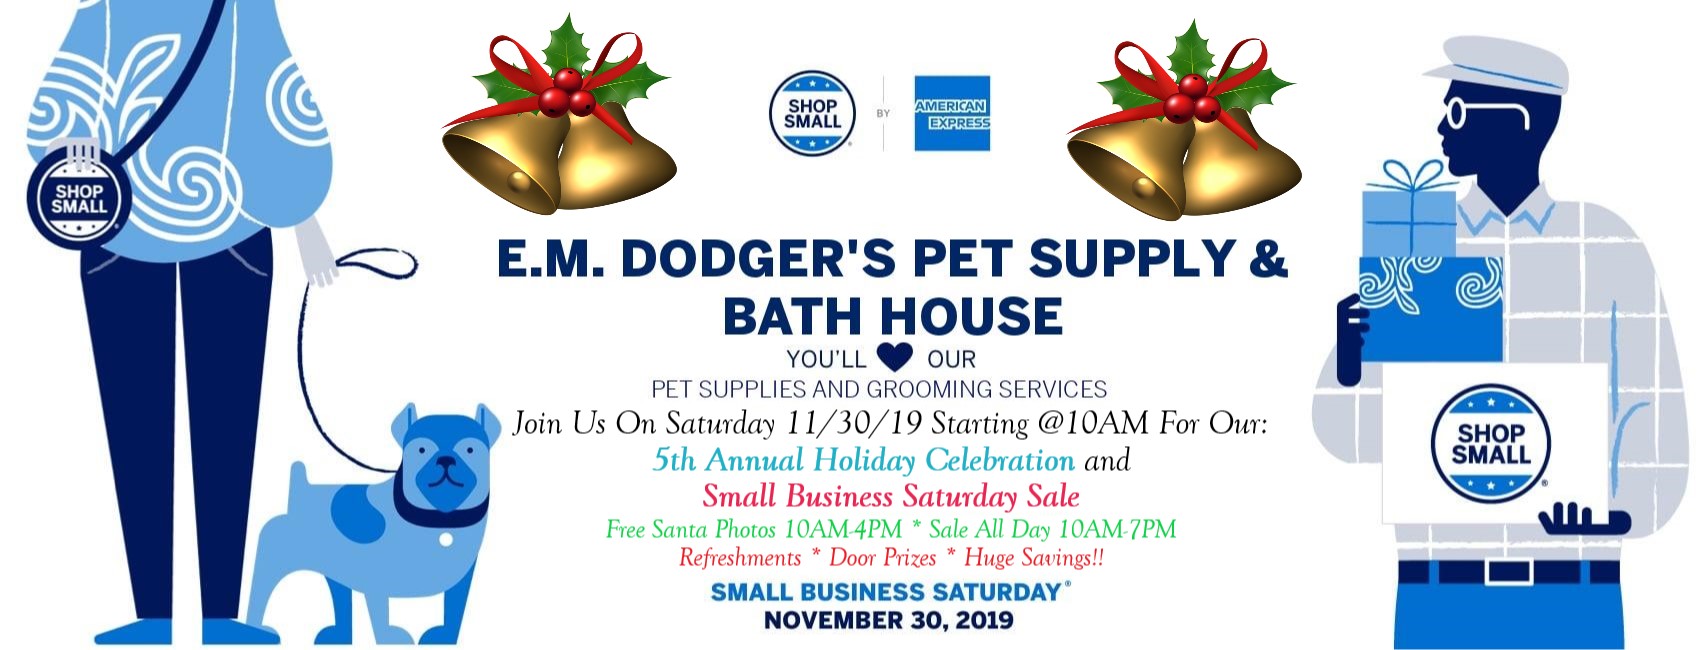 E.M. Dodger's Pet Supply & Bath House